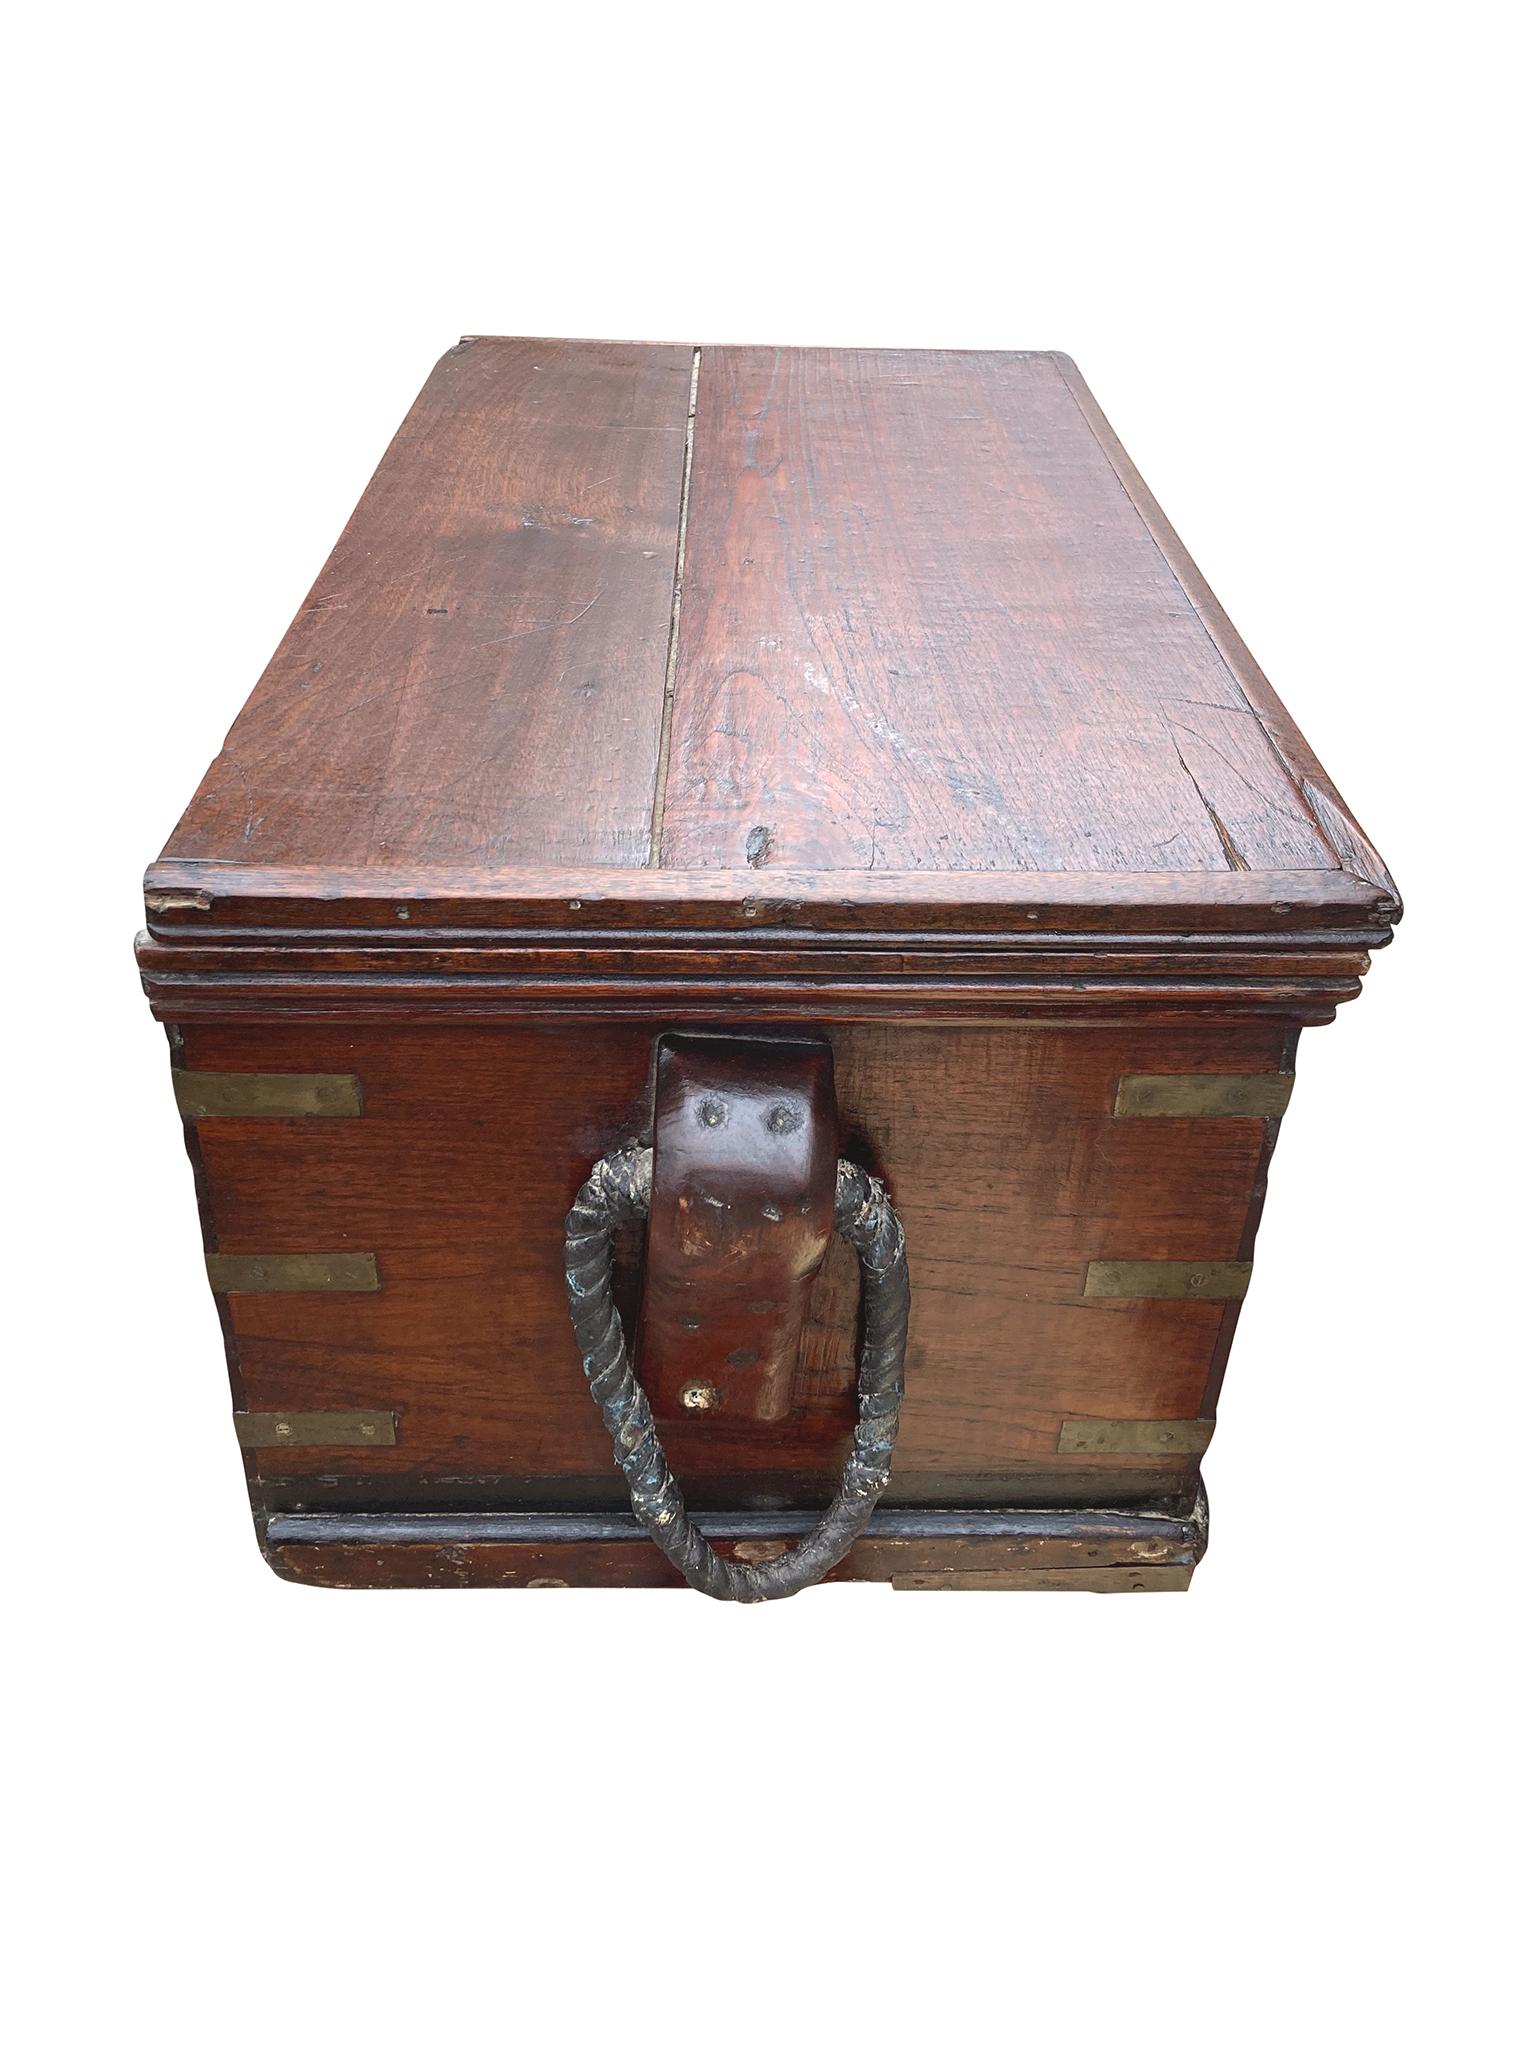 seaman's chest antique